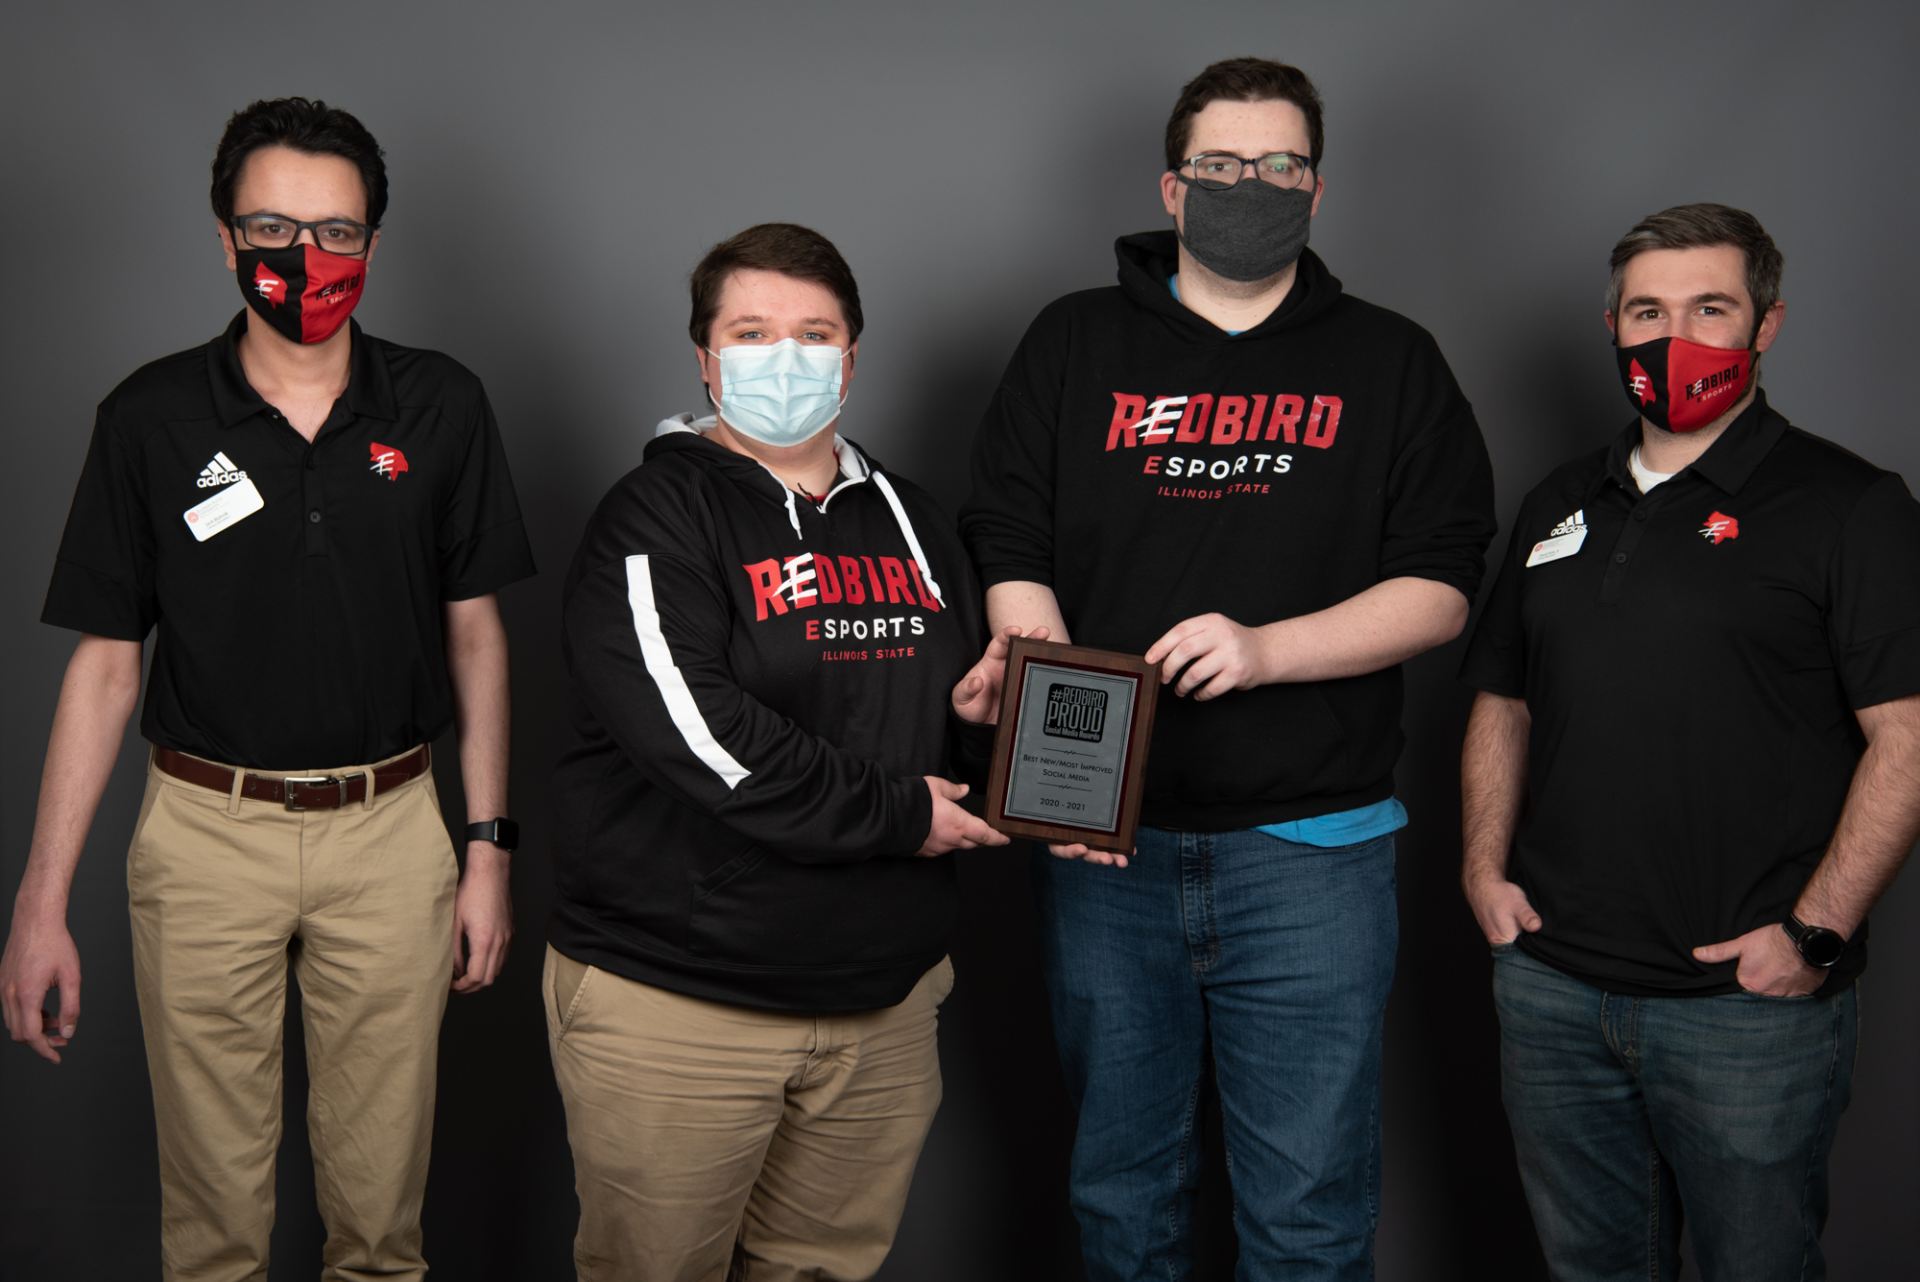 Redbird Esports posed with award